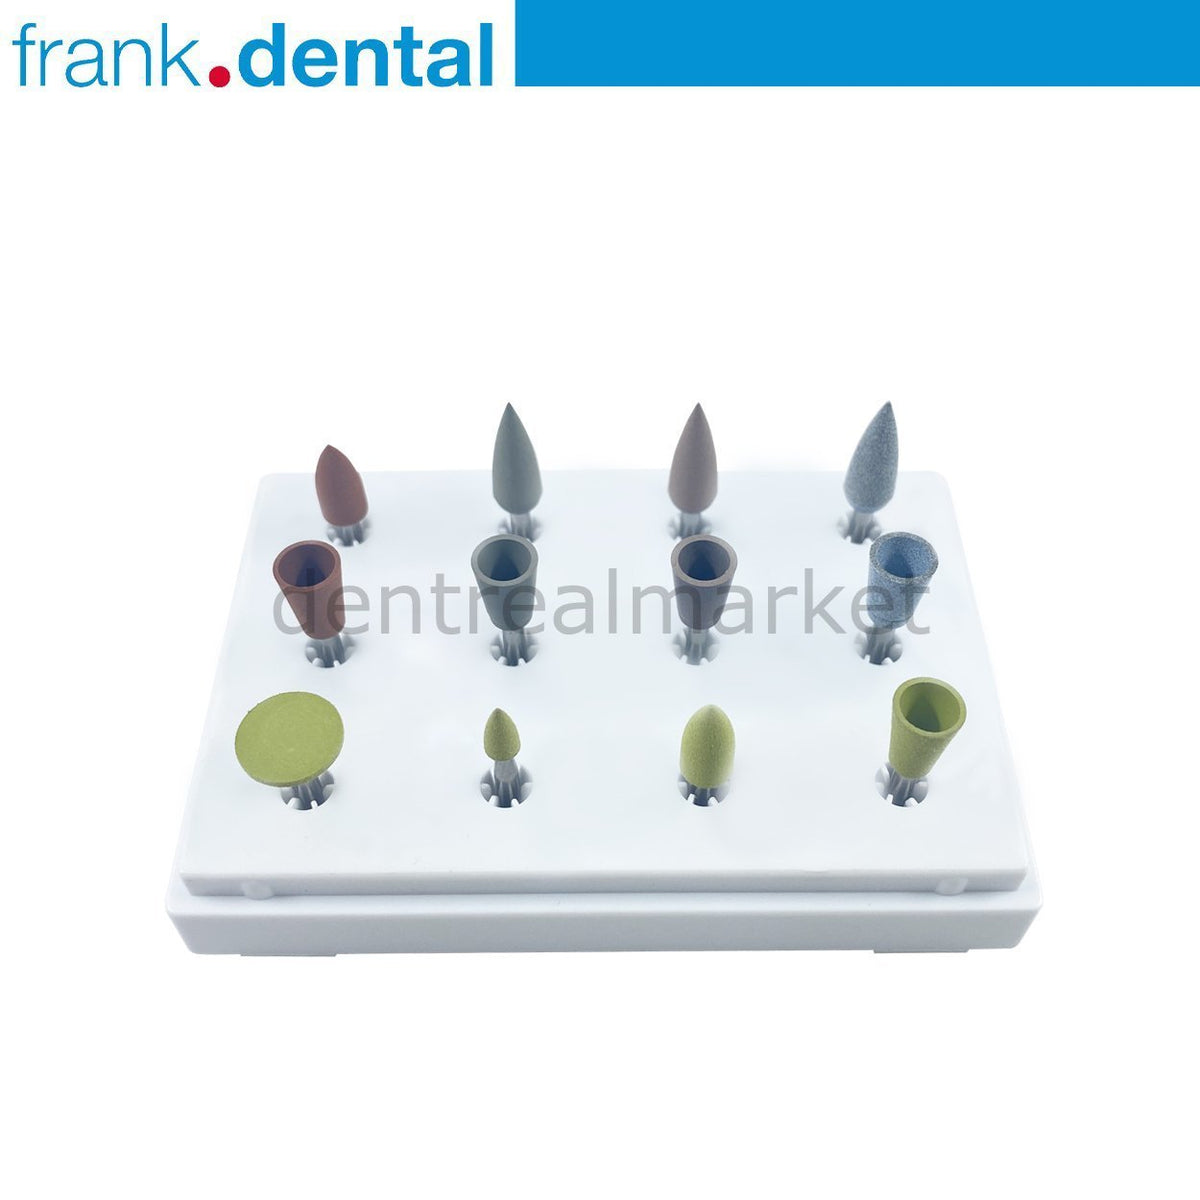 DentrealStore - Frank Dental Universal Polish and Polishing Set